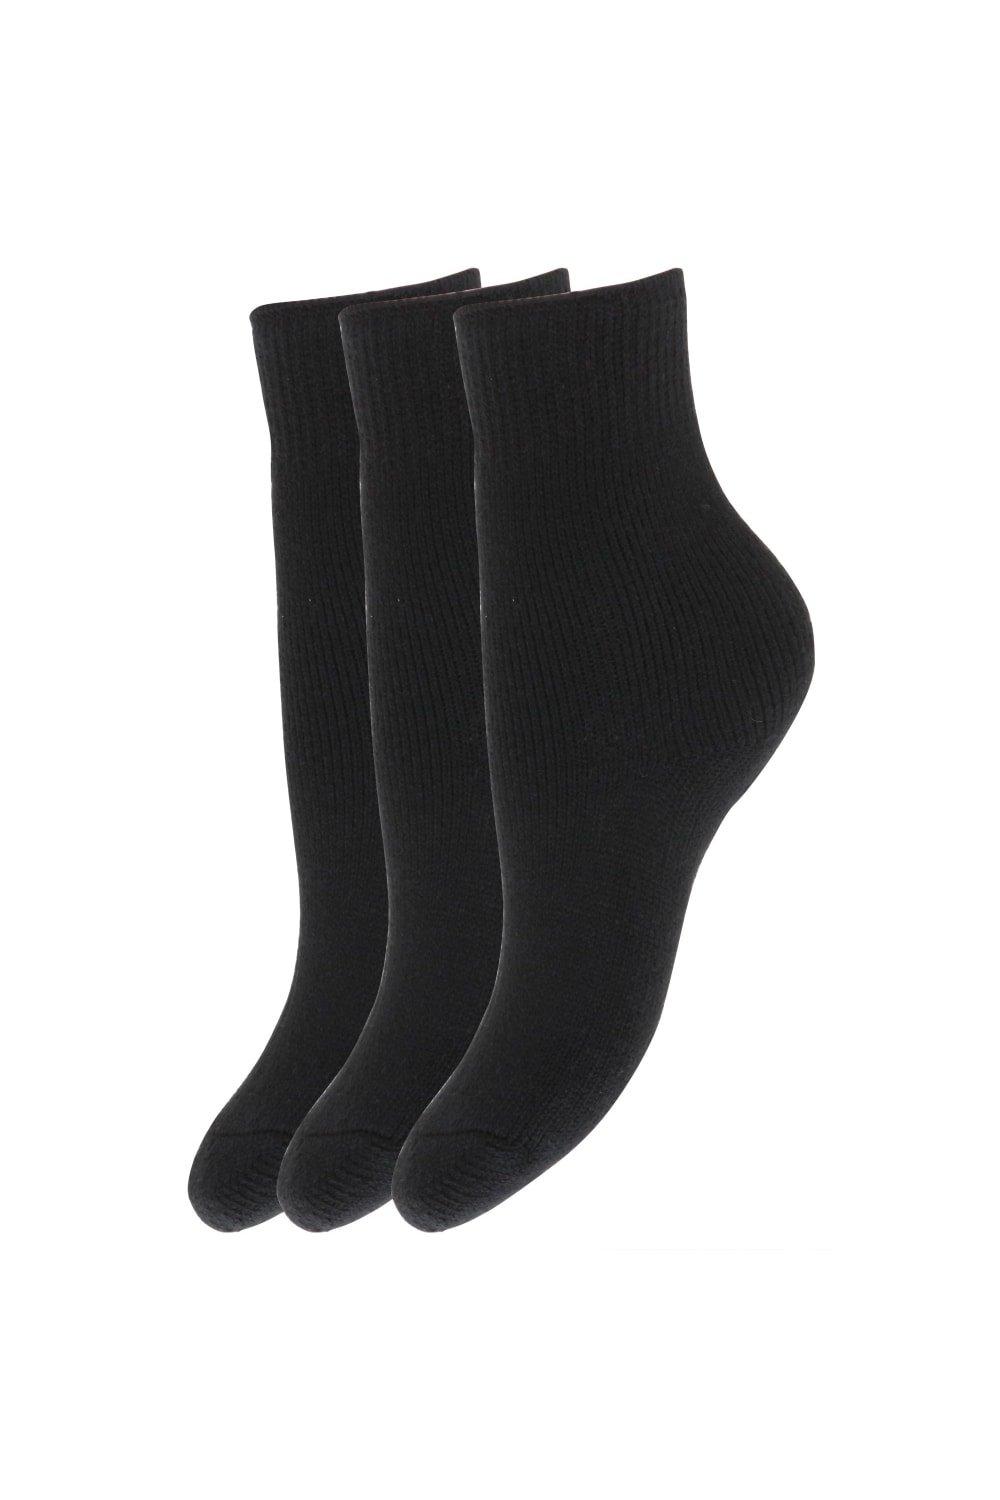 Winter Thermal Socks (Pack Of 3)